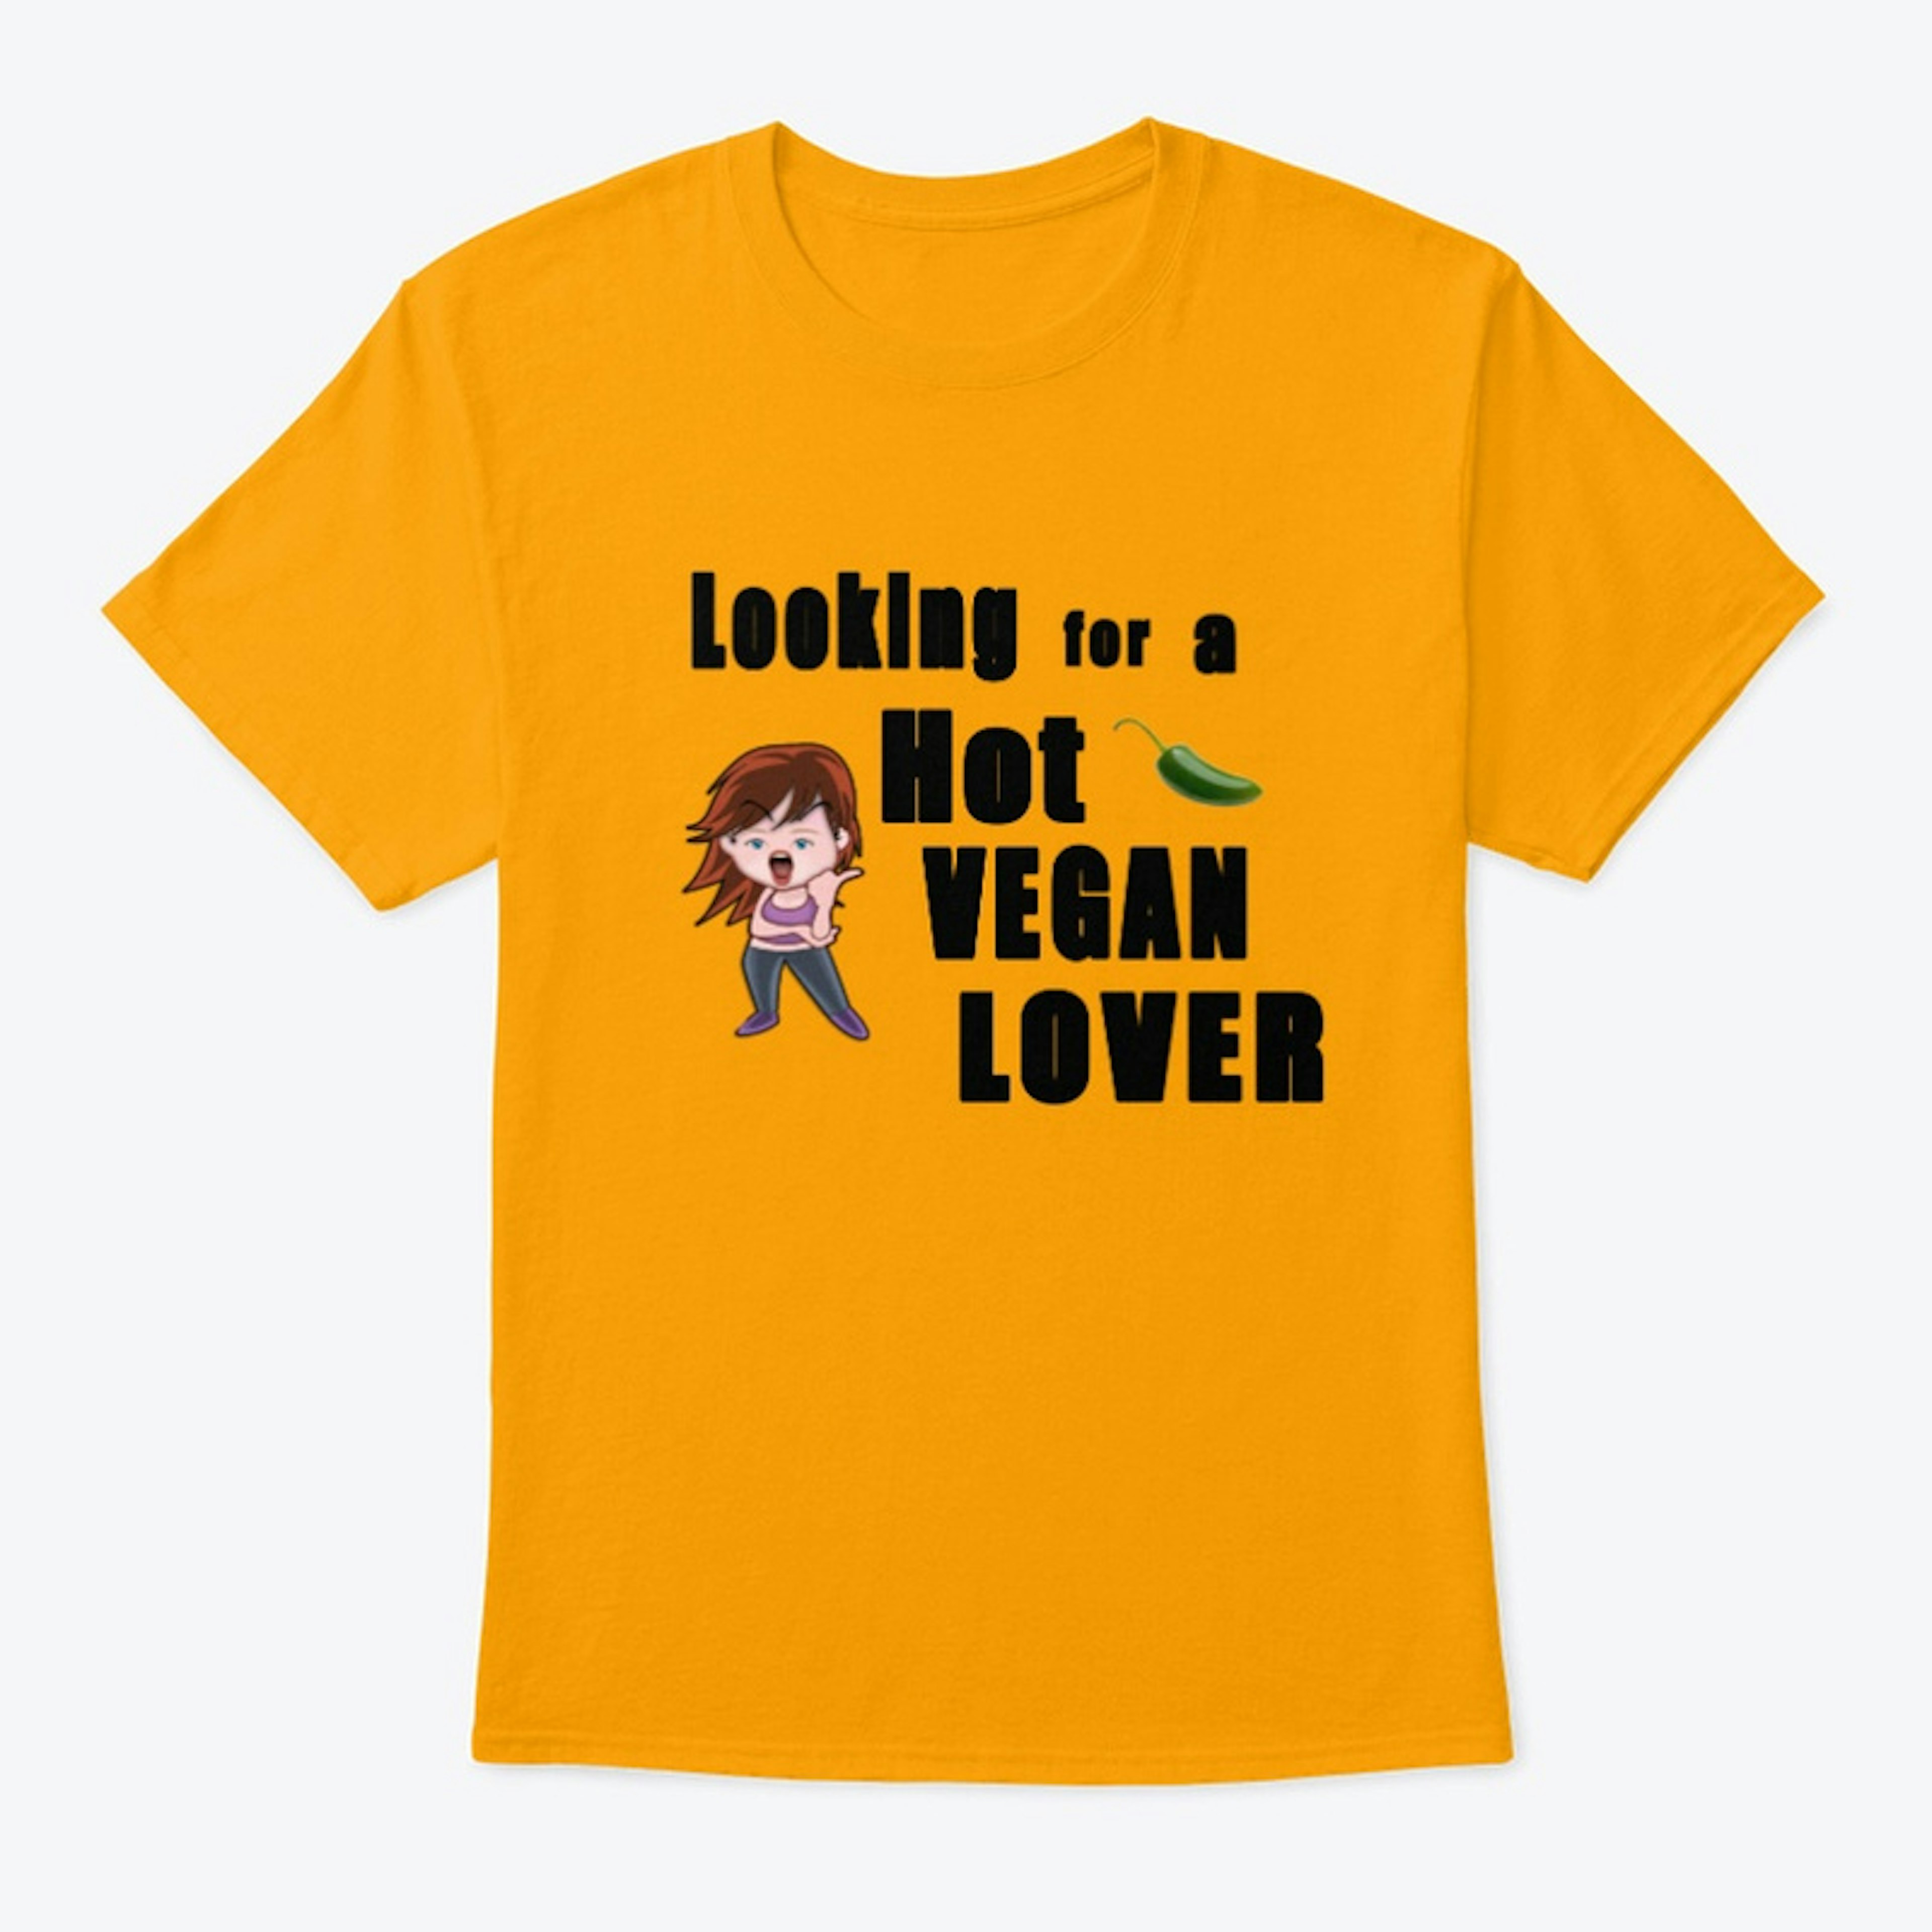 Hot Vegan Lover